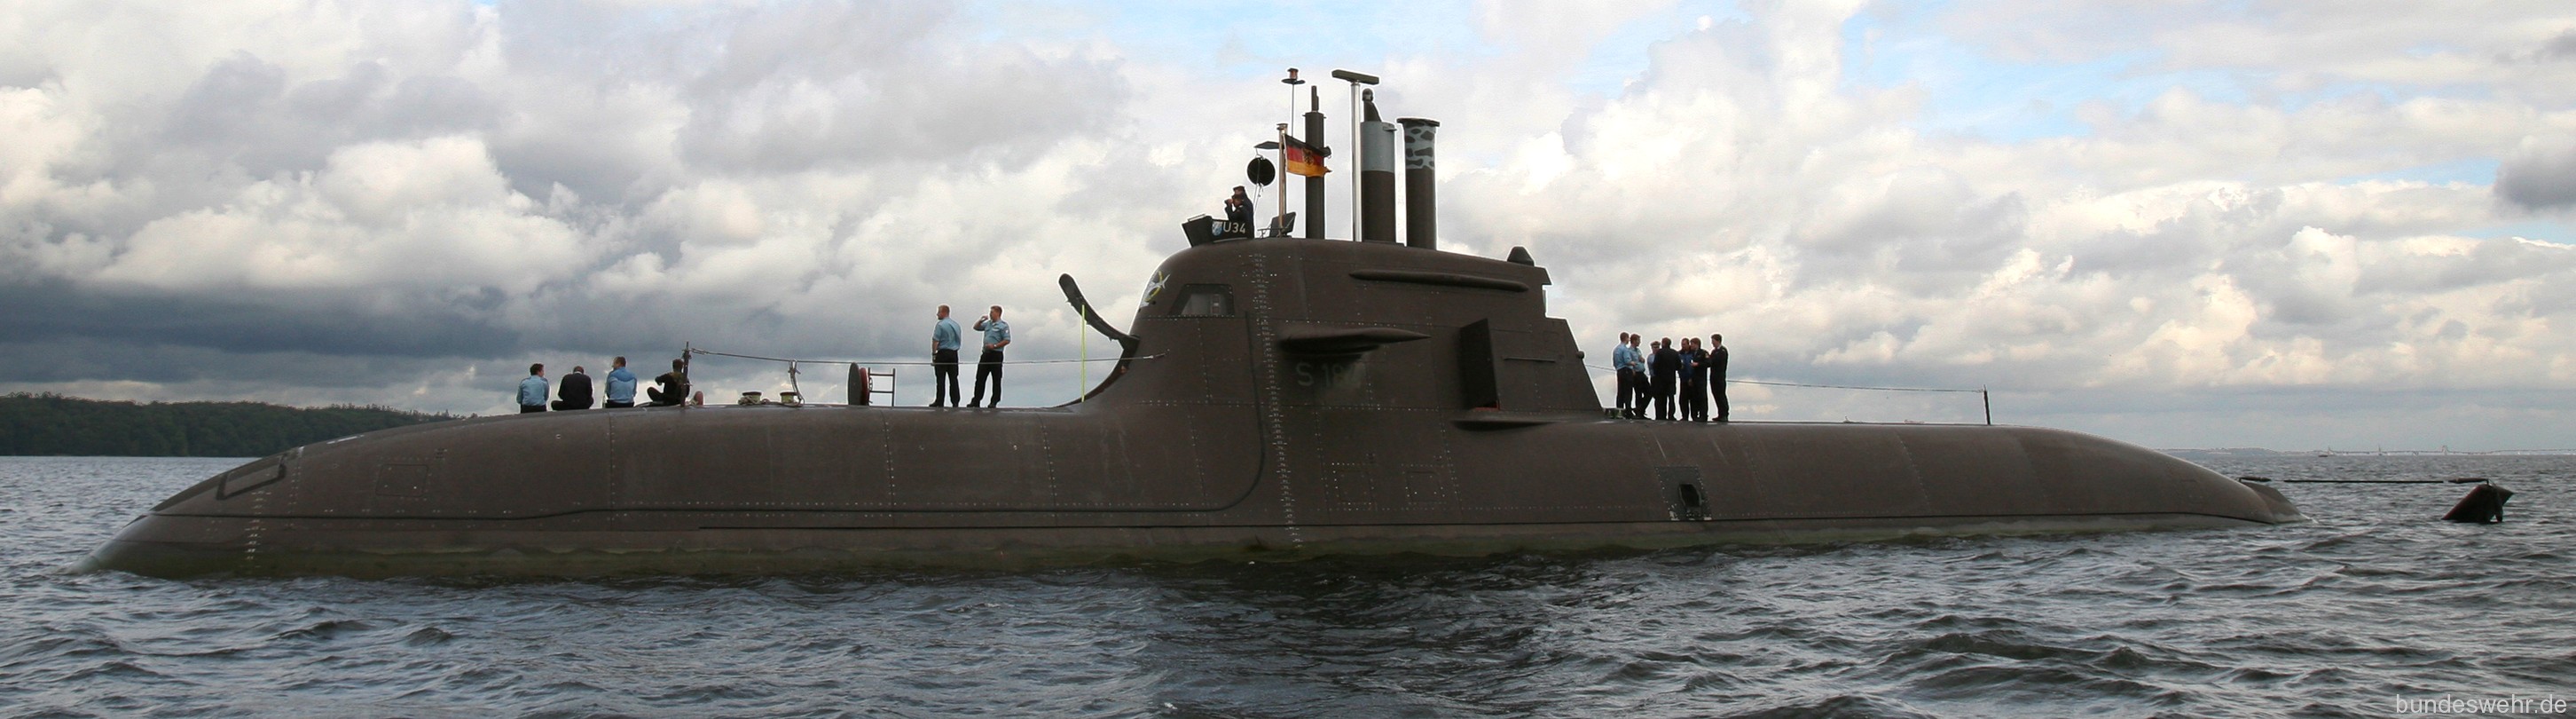 s-184 fgs u34 type 212a class submarine german navy 16